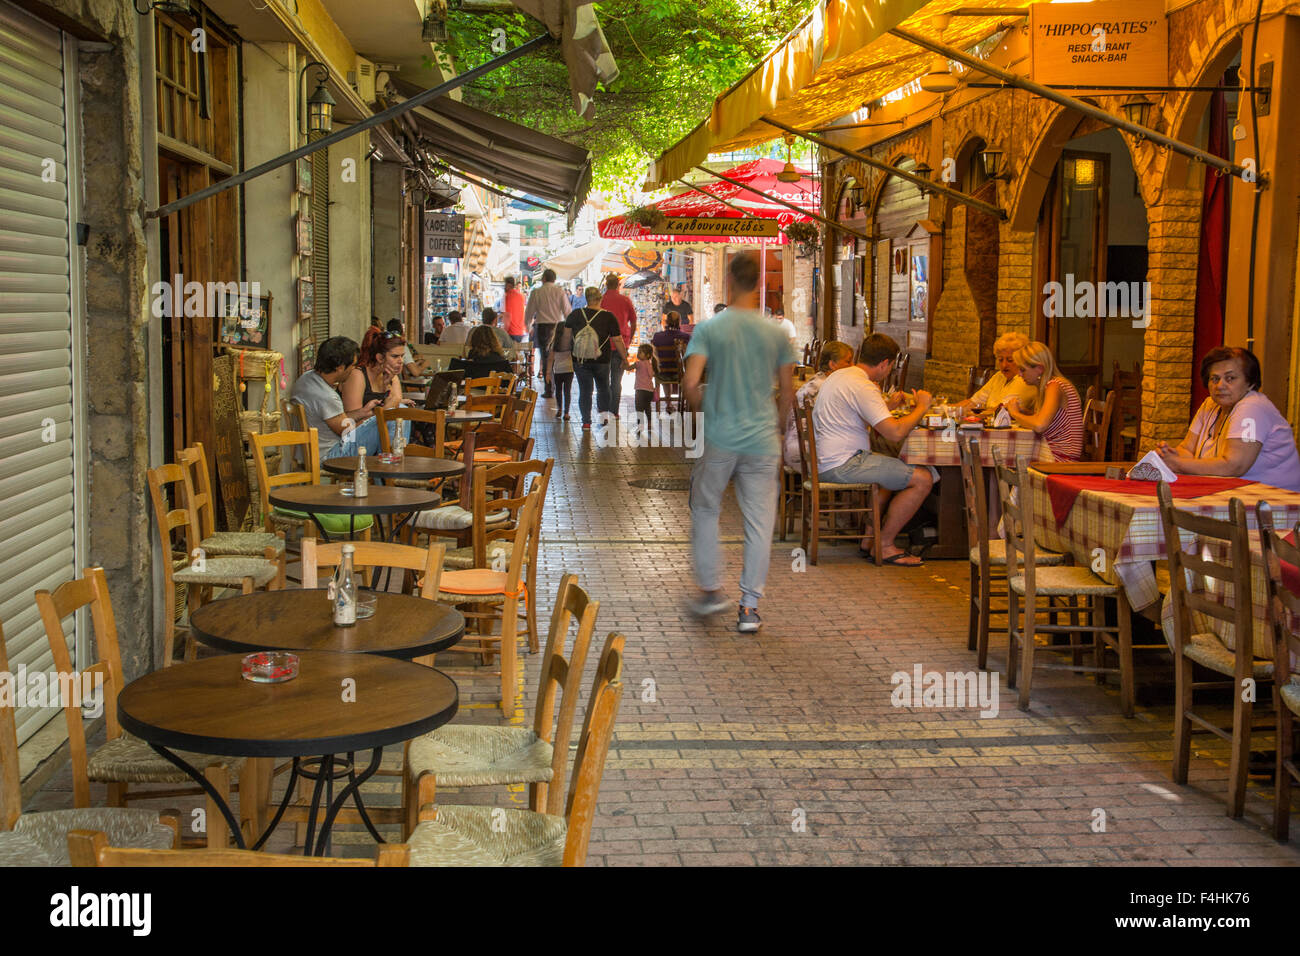 Cafes along narrow street in Lefkosia (Nicosia), Cyprus. Stock Photo